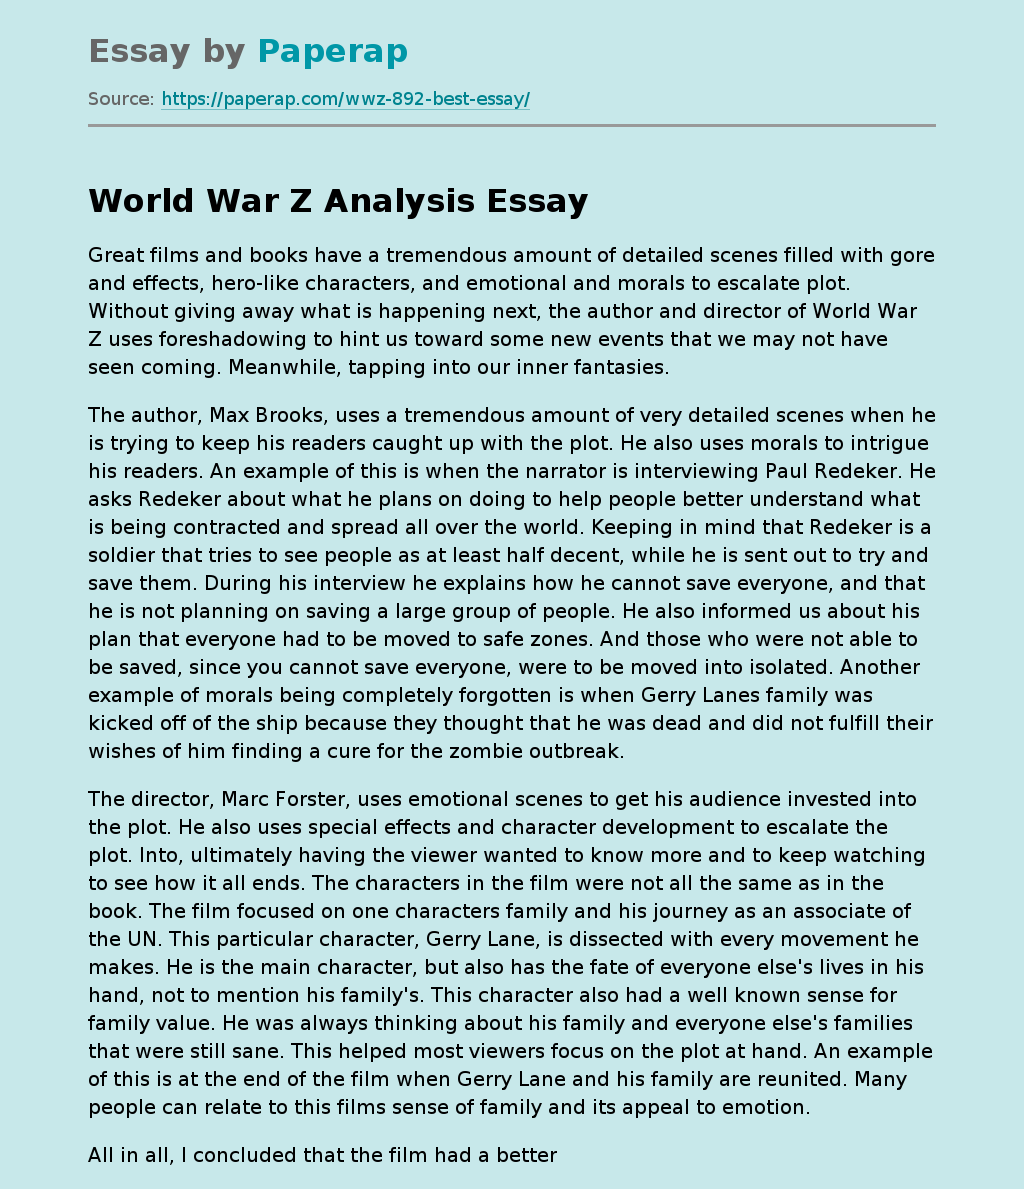 World War Z Analysis